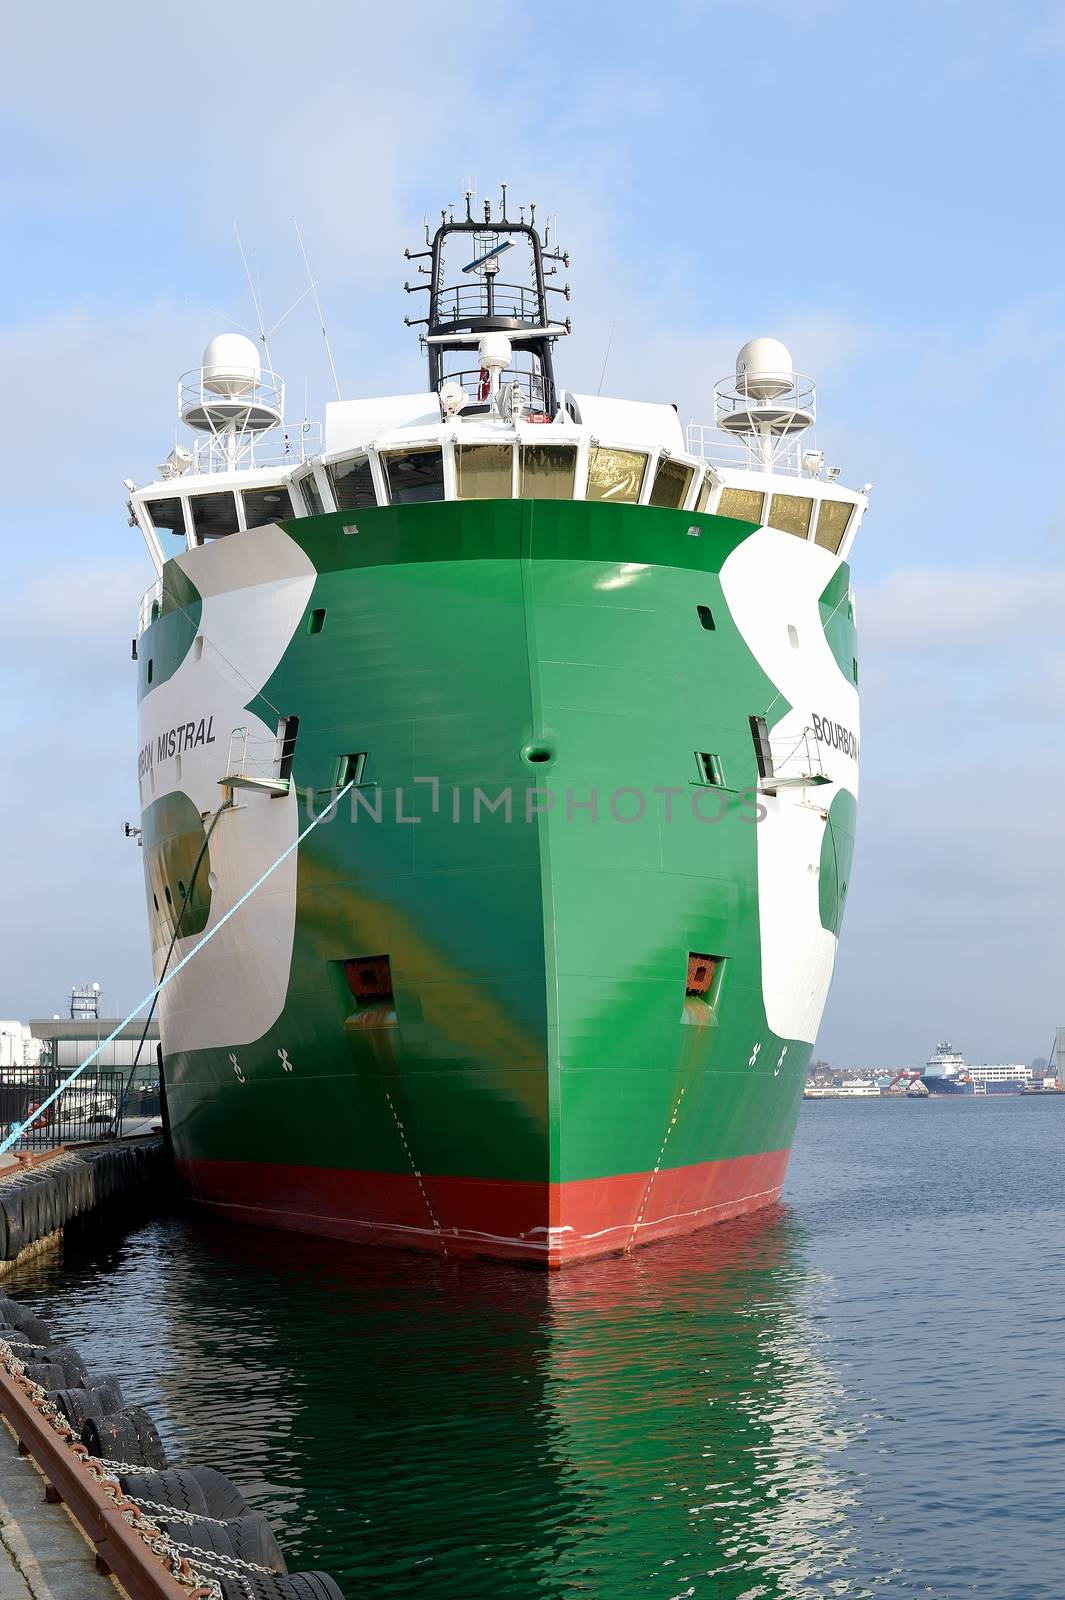 MV Bourbon Mistral Offshore North Sea Supply Vessel by Whiteboxmedia